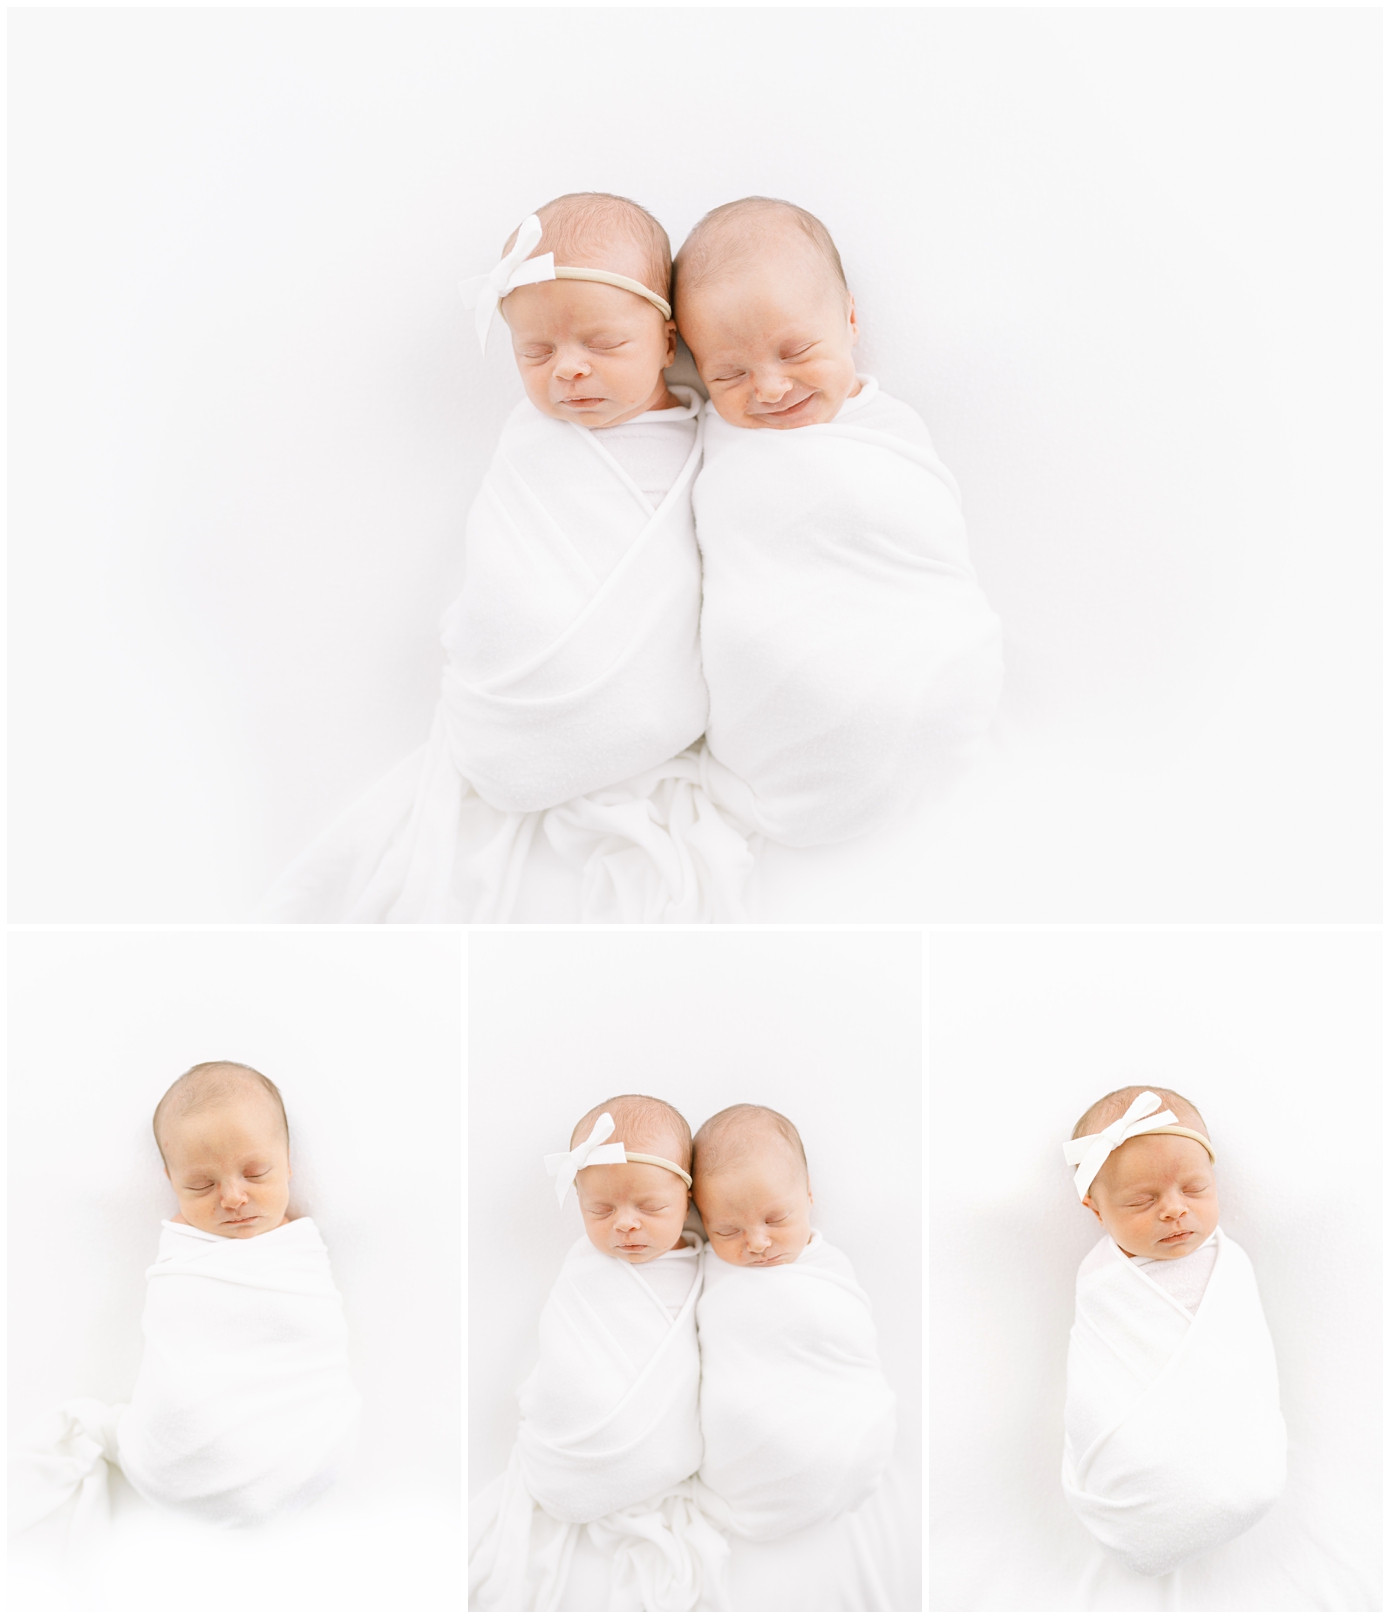 Newborn Twins Marietta Studio Atlanta Photographer